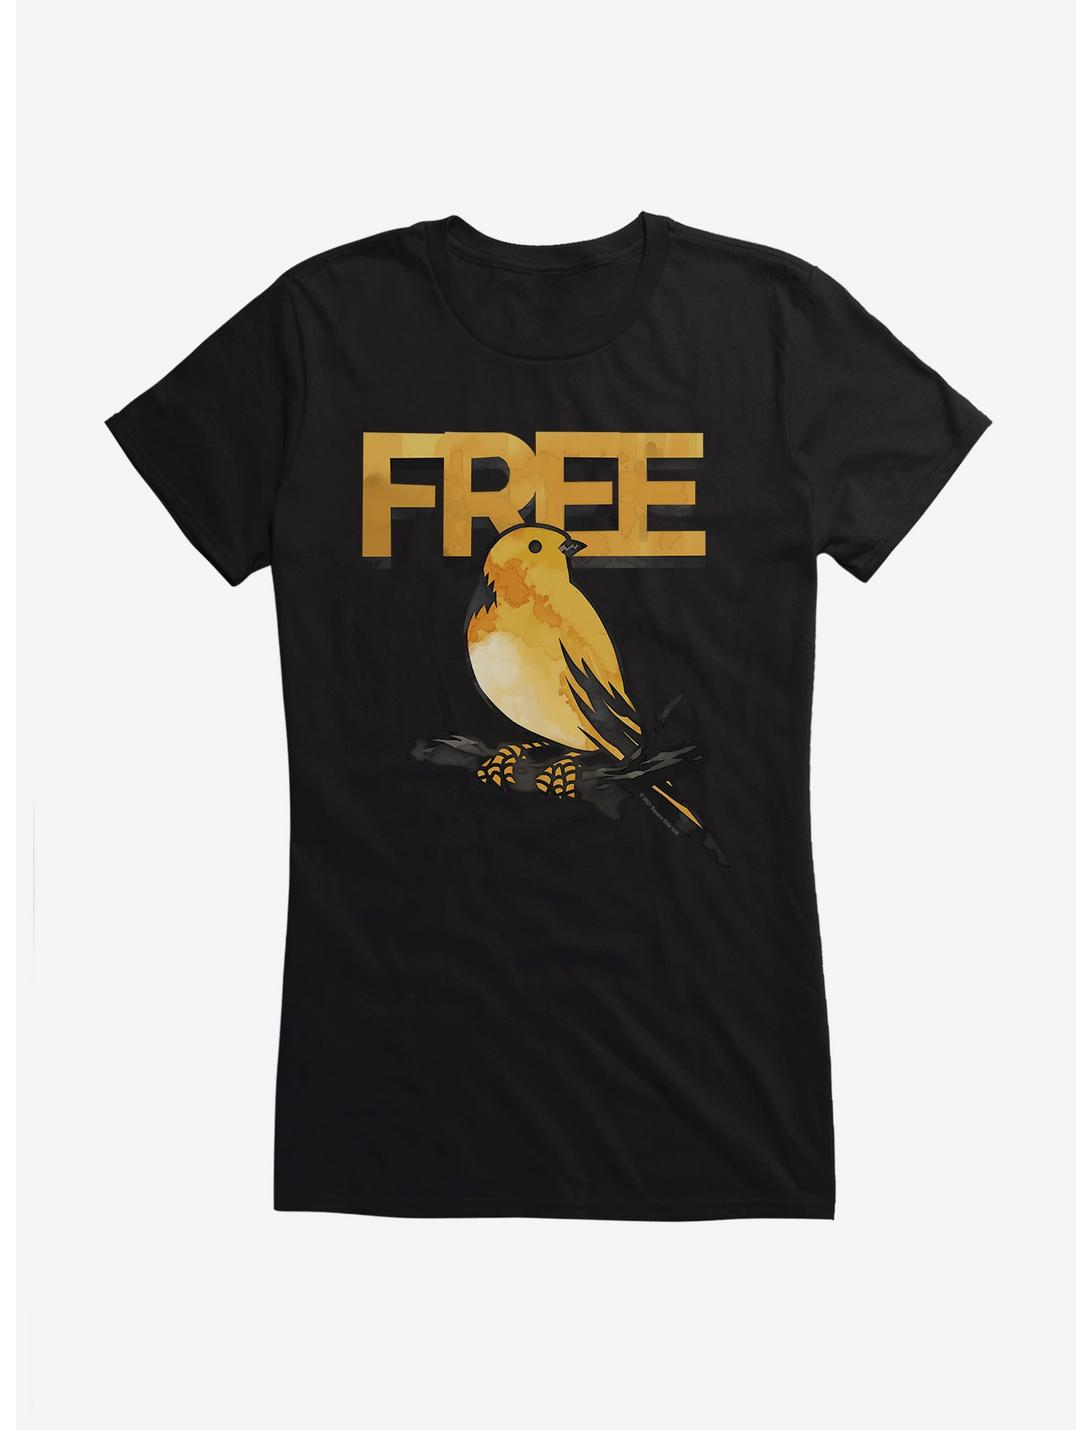 Square Enix Free Bird Girls T-Shirt, BLACK, hi-res